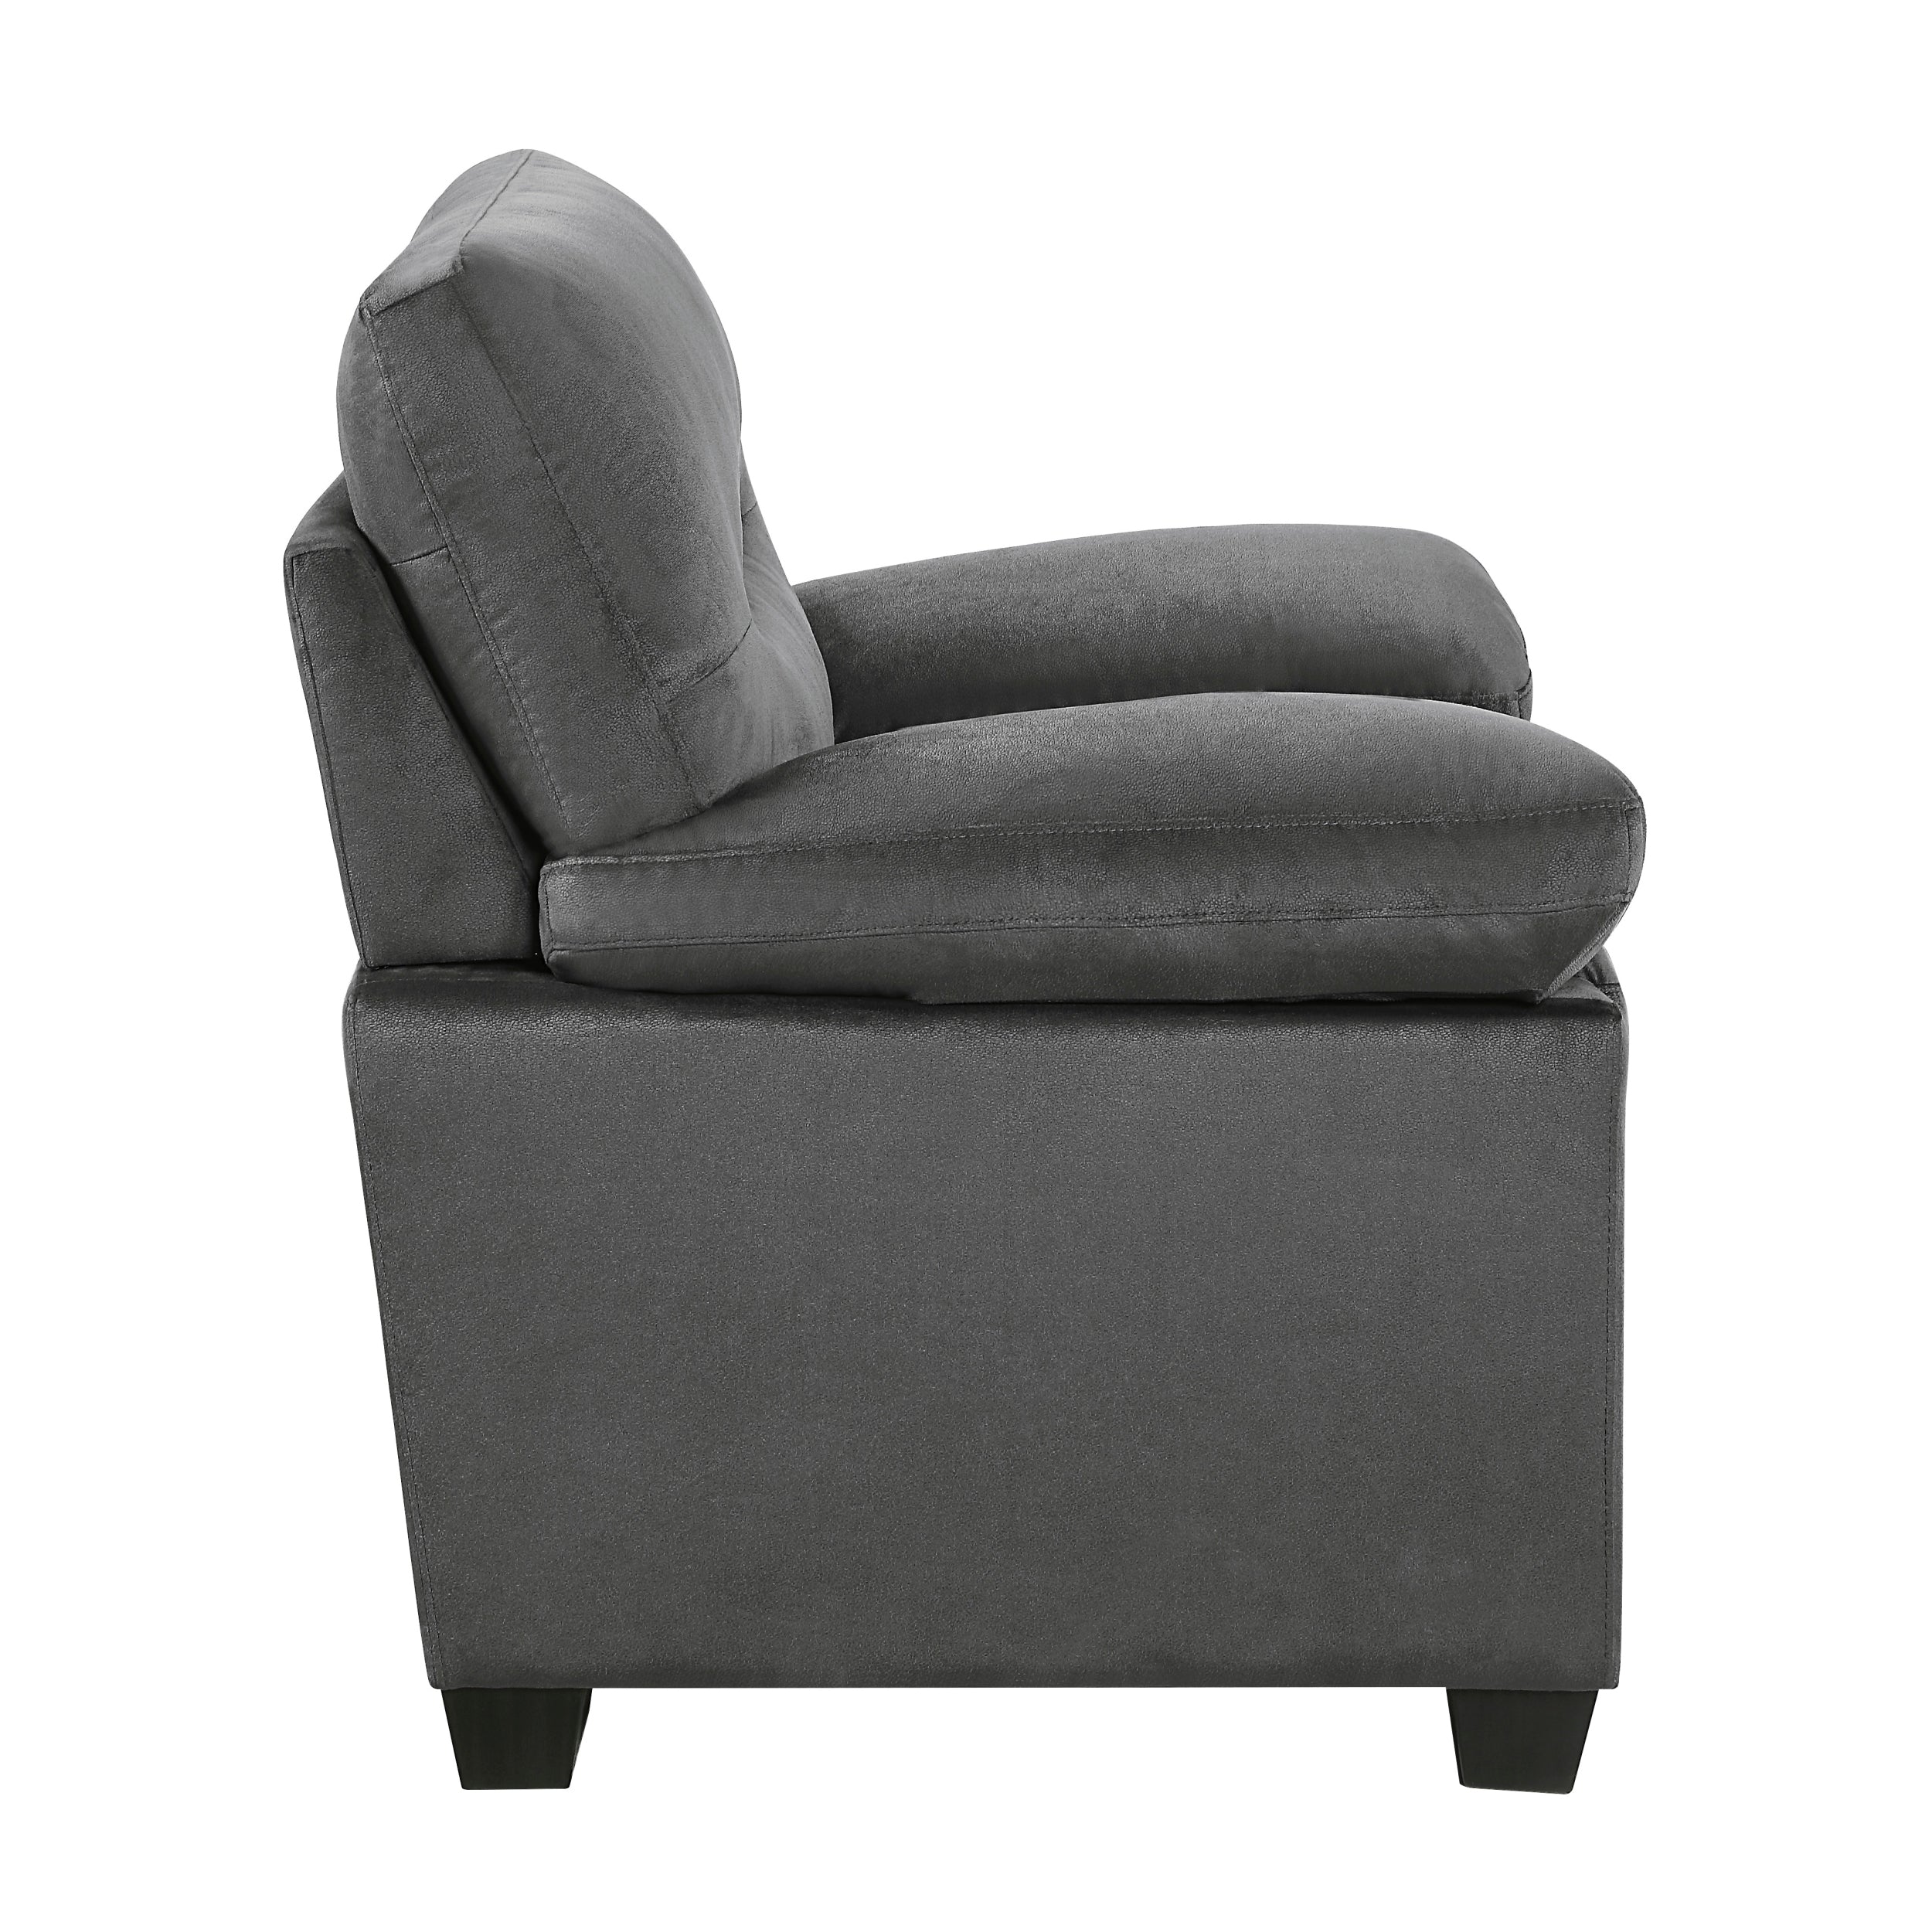 Modern Sleek Design Living Room Furniture 1pc Sofa